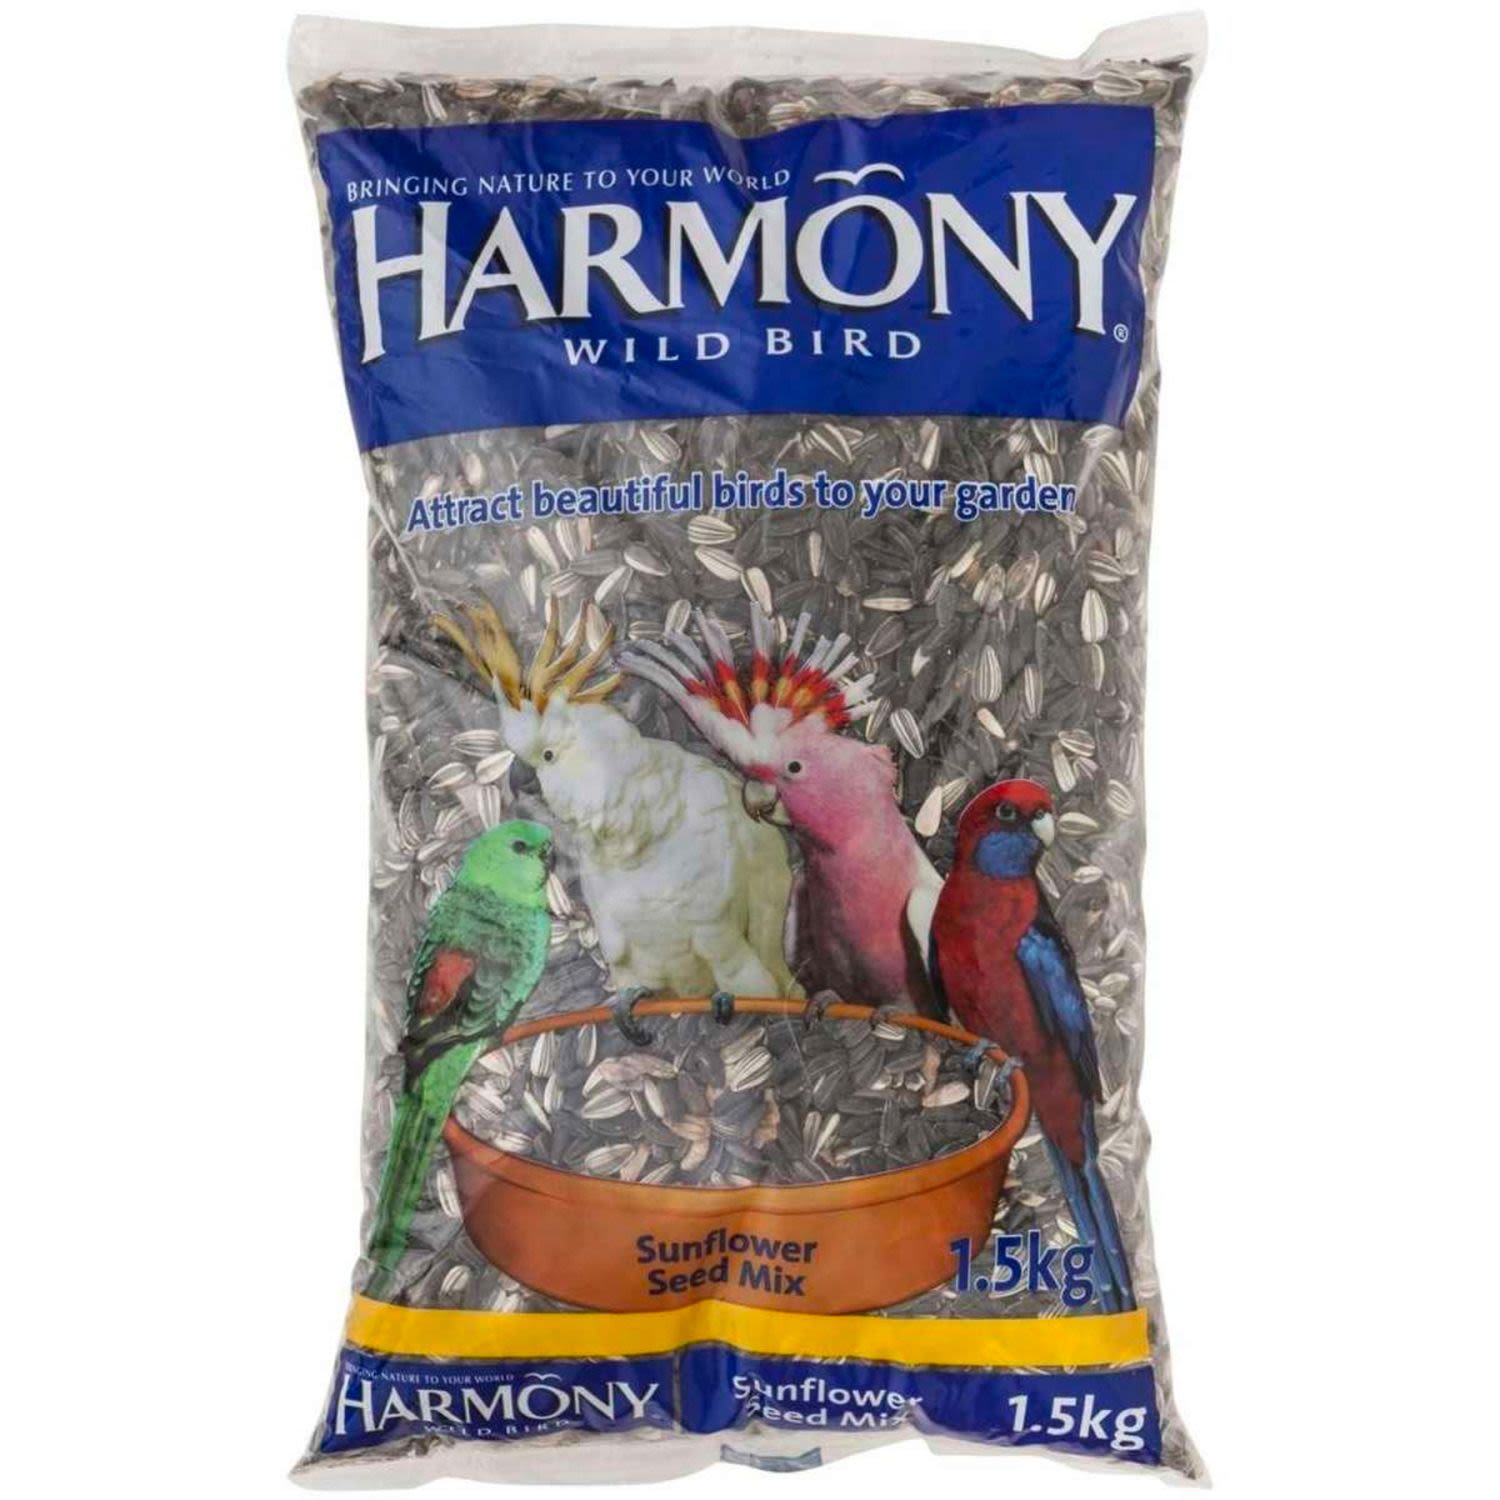 Harmony Wild Bird Sunflower Seed Mix, 1.5 Kilogram